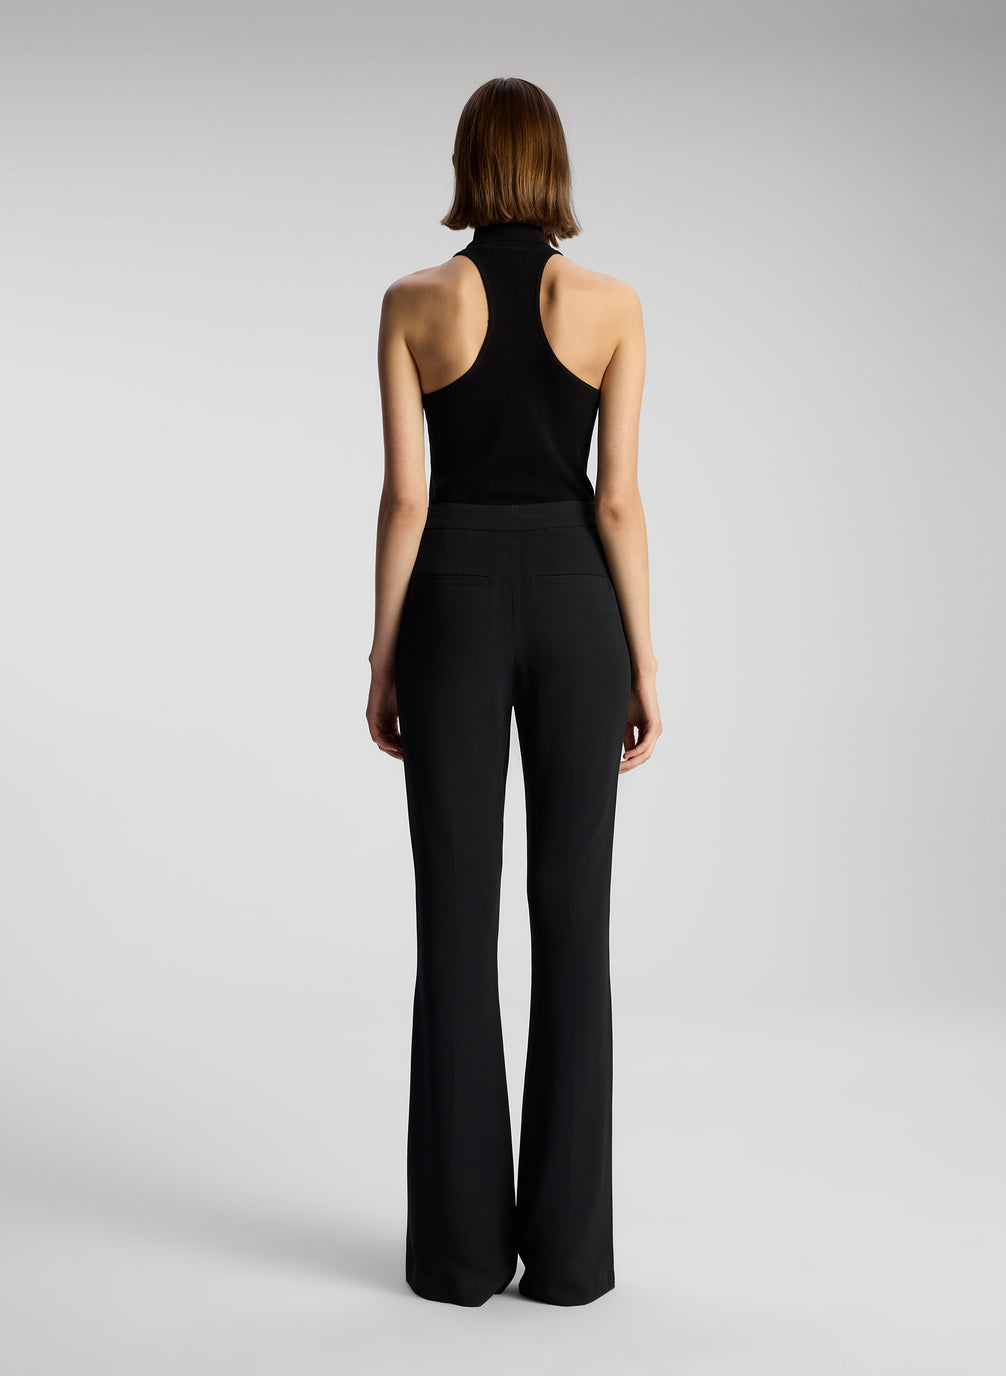 back view of woman wearing black sleeveless turtleneck and black pants